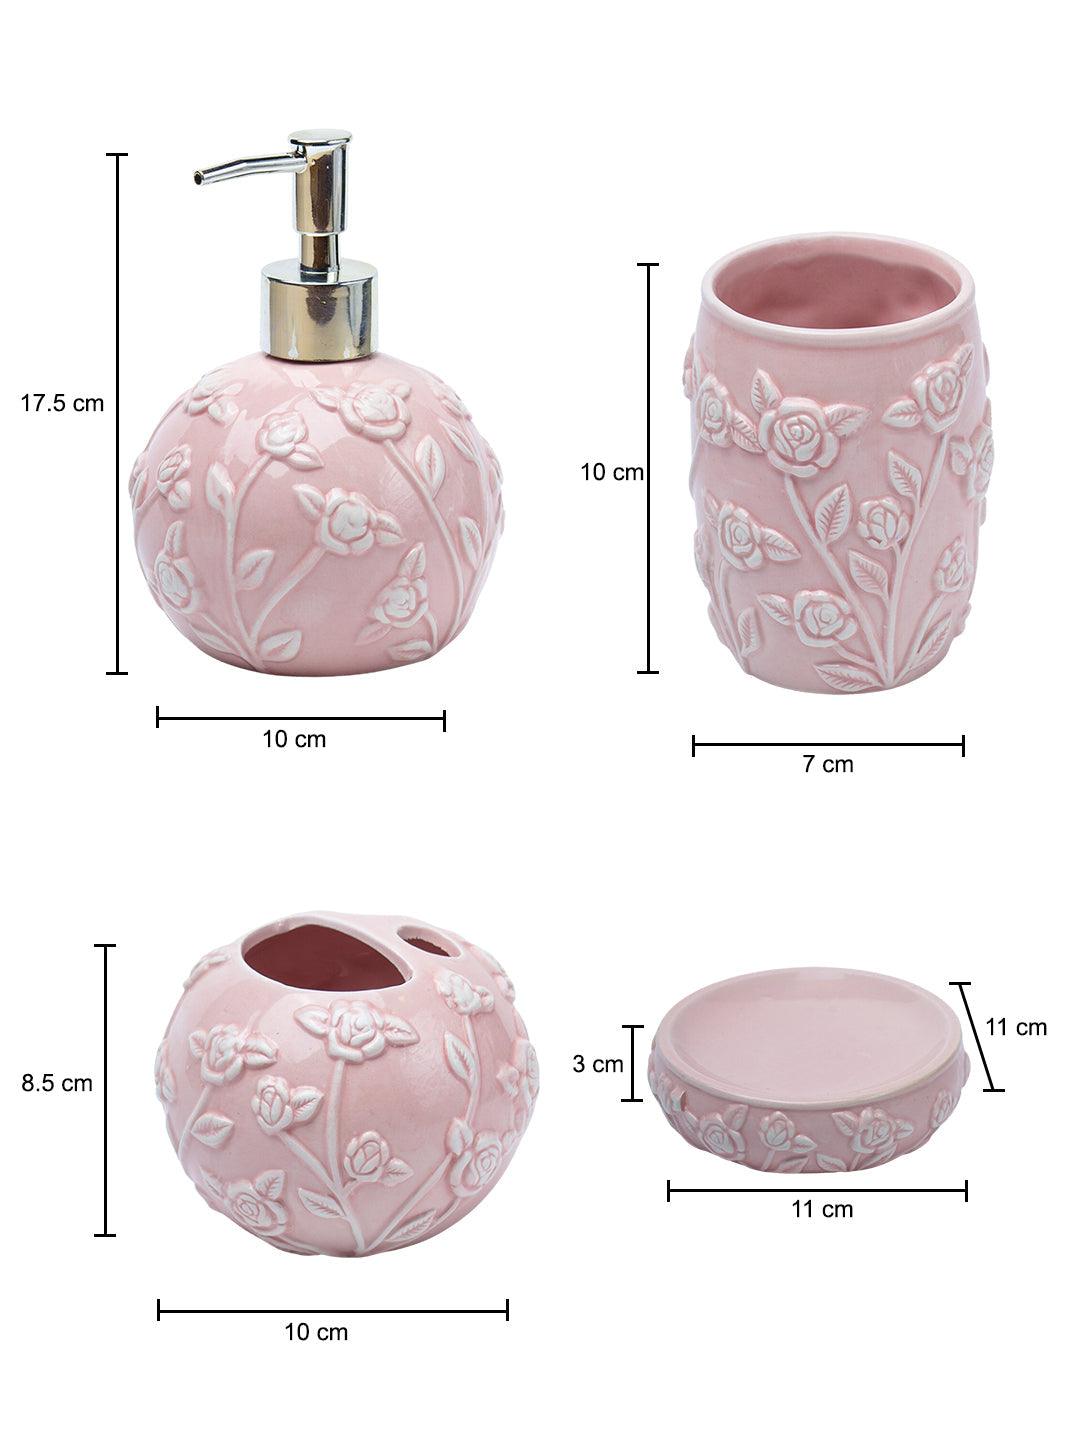 Pink Ceramic Bathroom Set Of 4 - Floral Design, Bath Accessories - 7